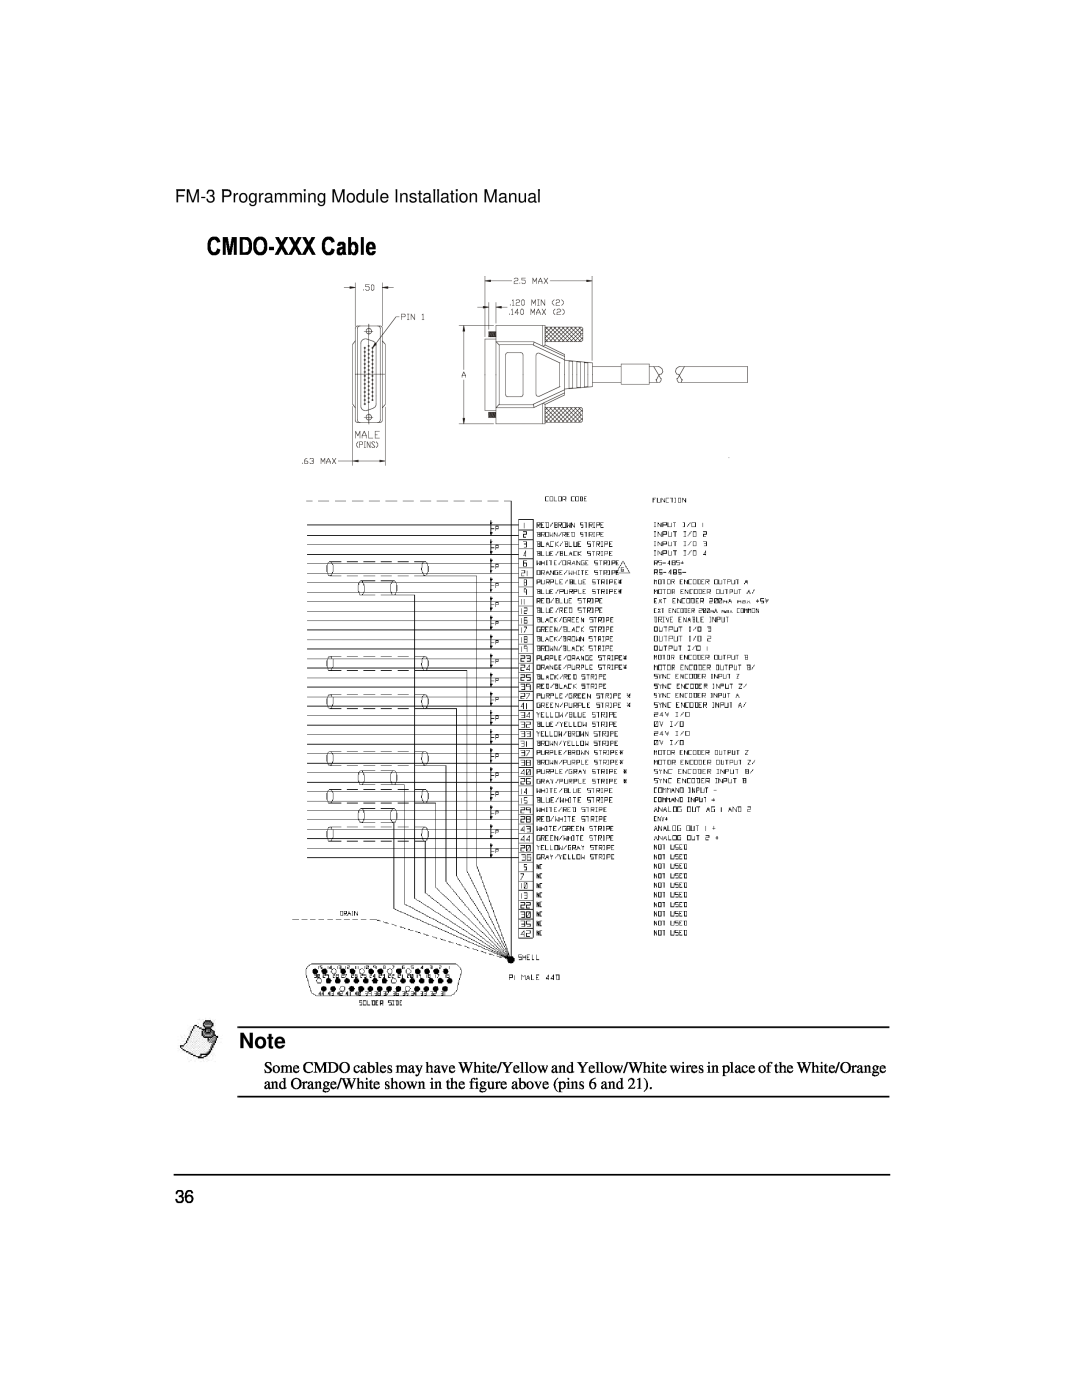 Emerson 400508-02 installation manual CMDO-XXX Cable, FM-3 Programming Module Installation Manual 